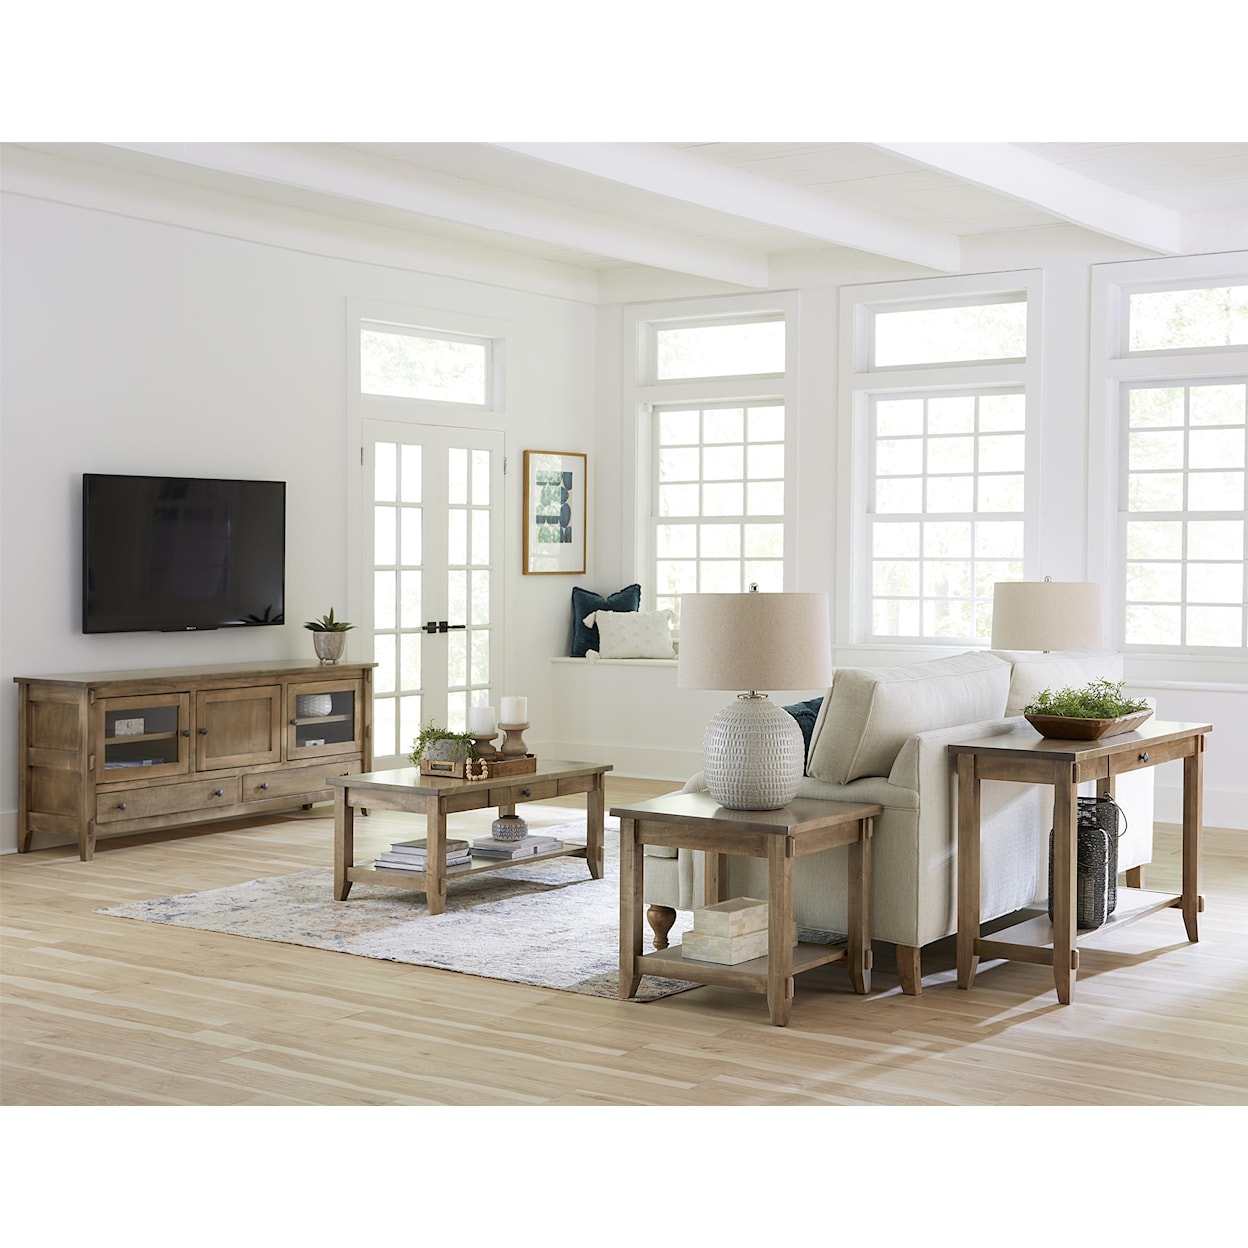 Archbold Furniture Amish Essentials Living Room Entertainment Console